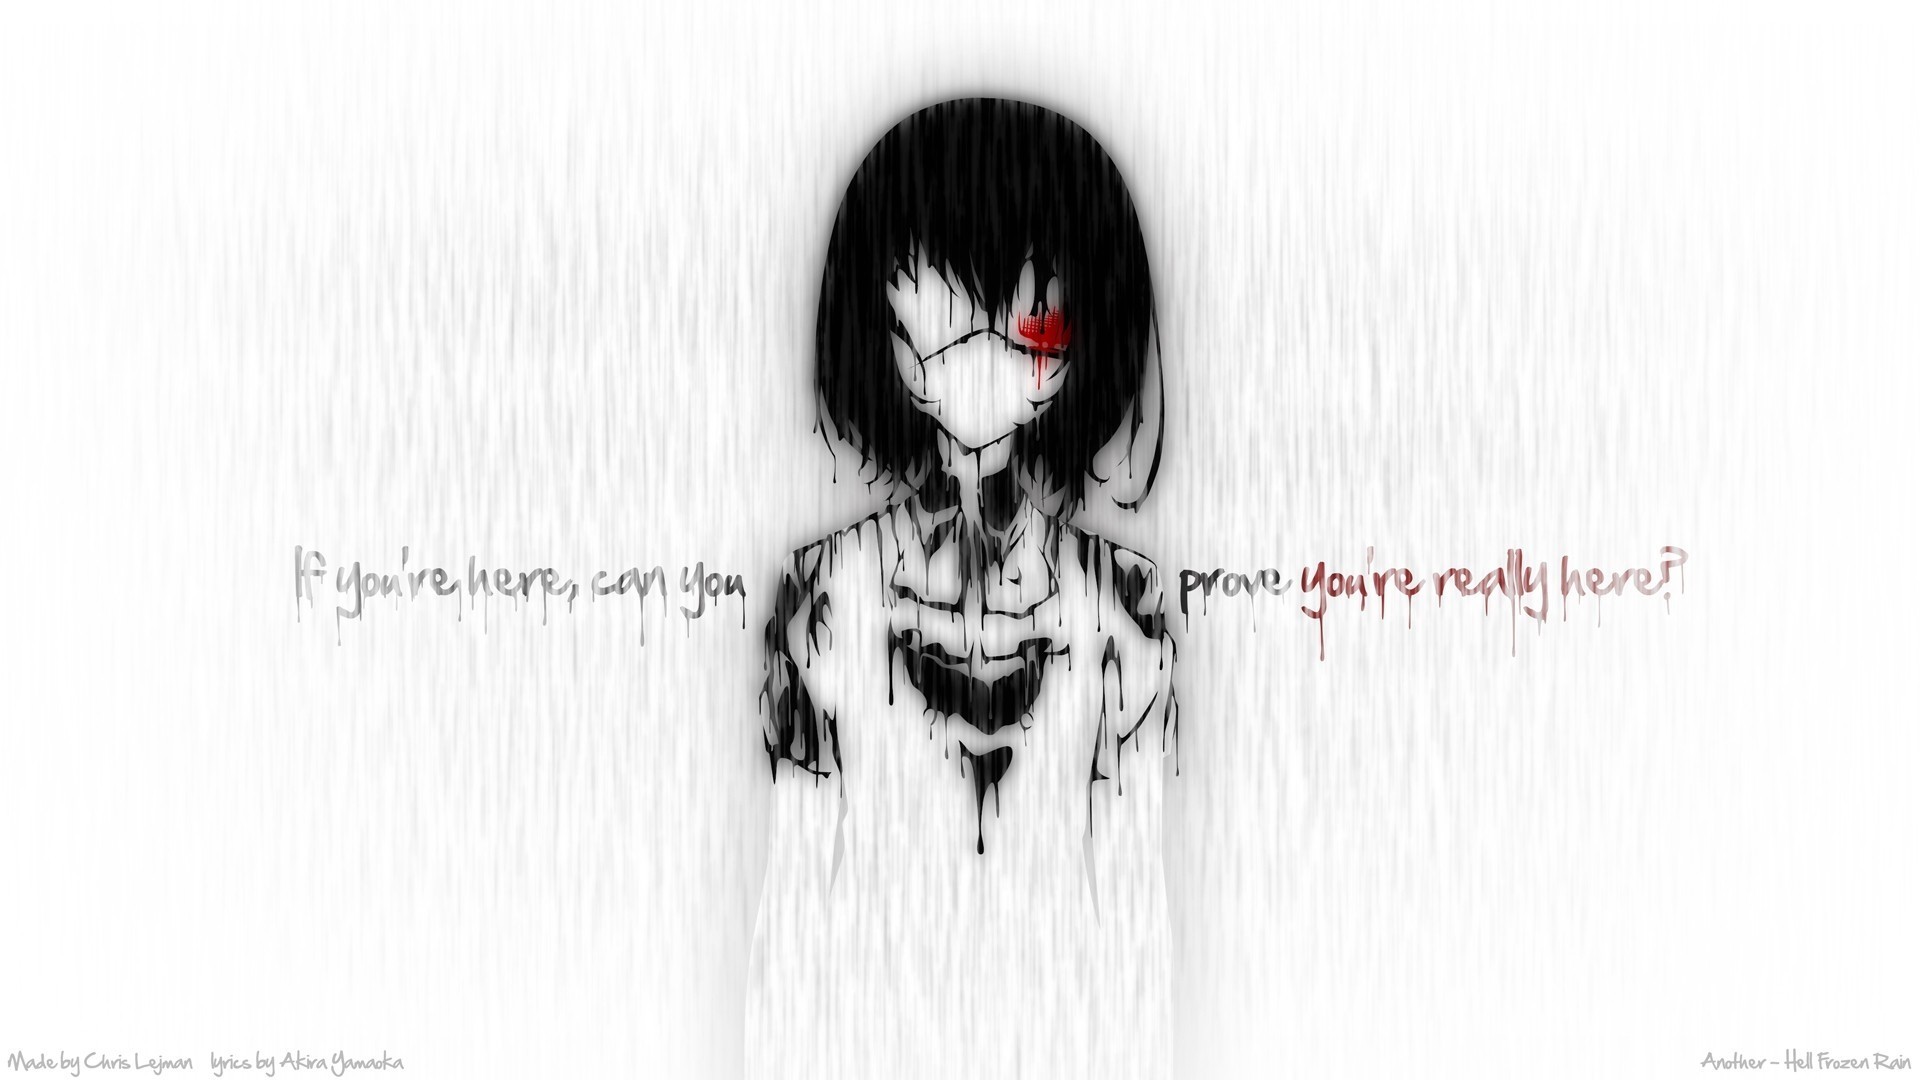 creepy anime wallpaper,facial expression,black hair,text,illustration,anime